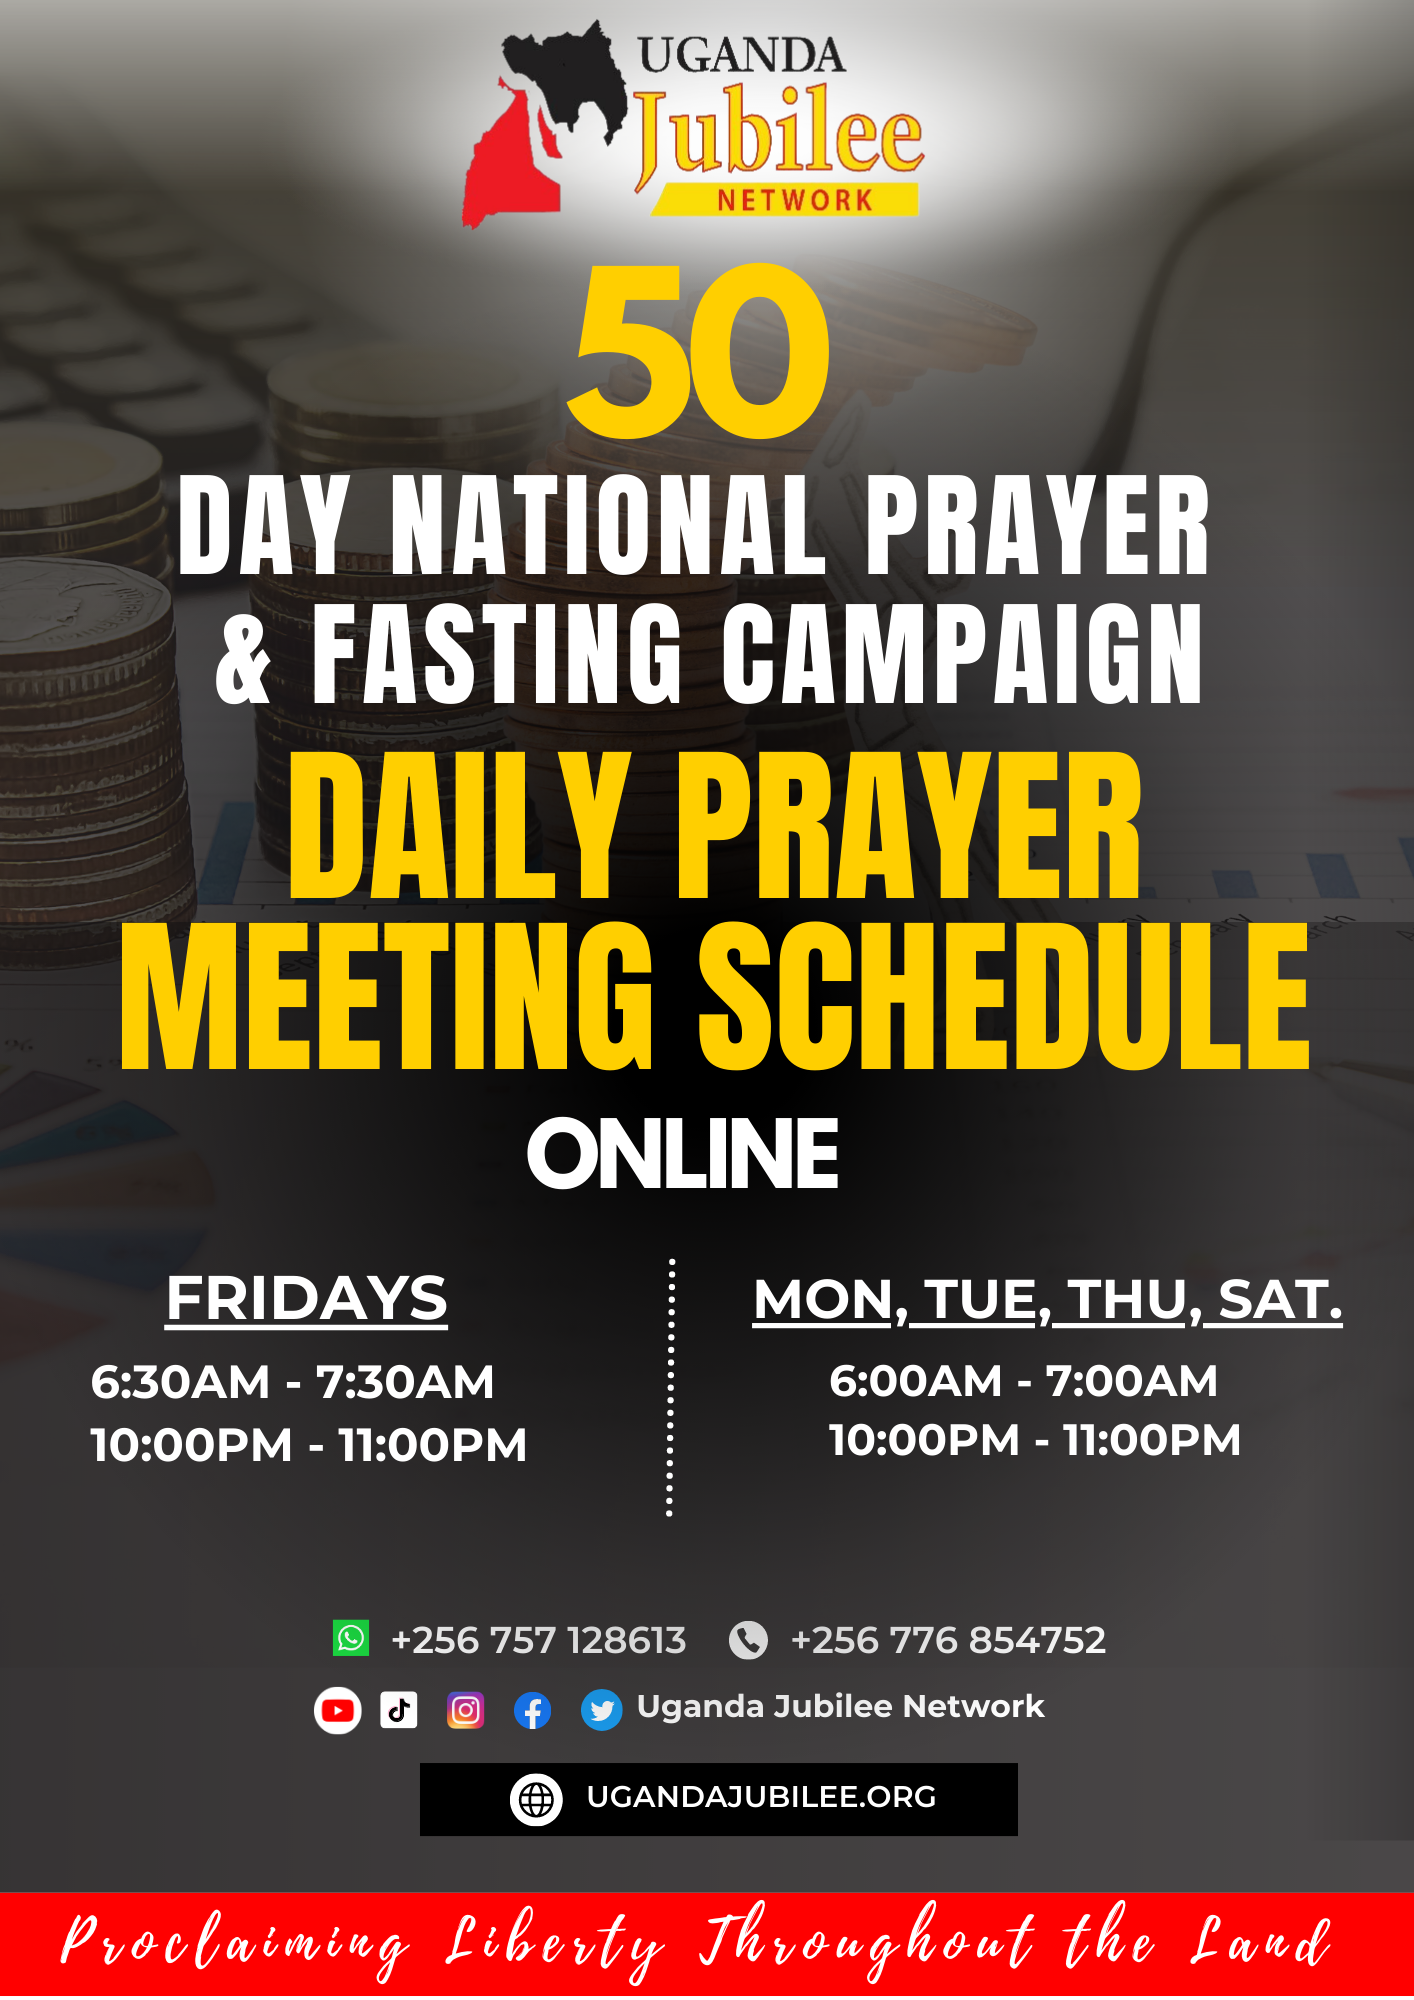 Daily Prayer Meetings